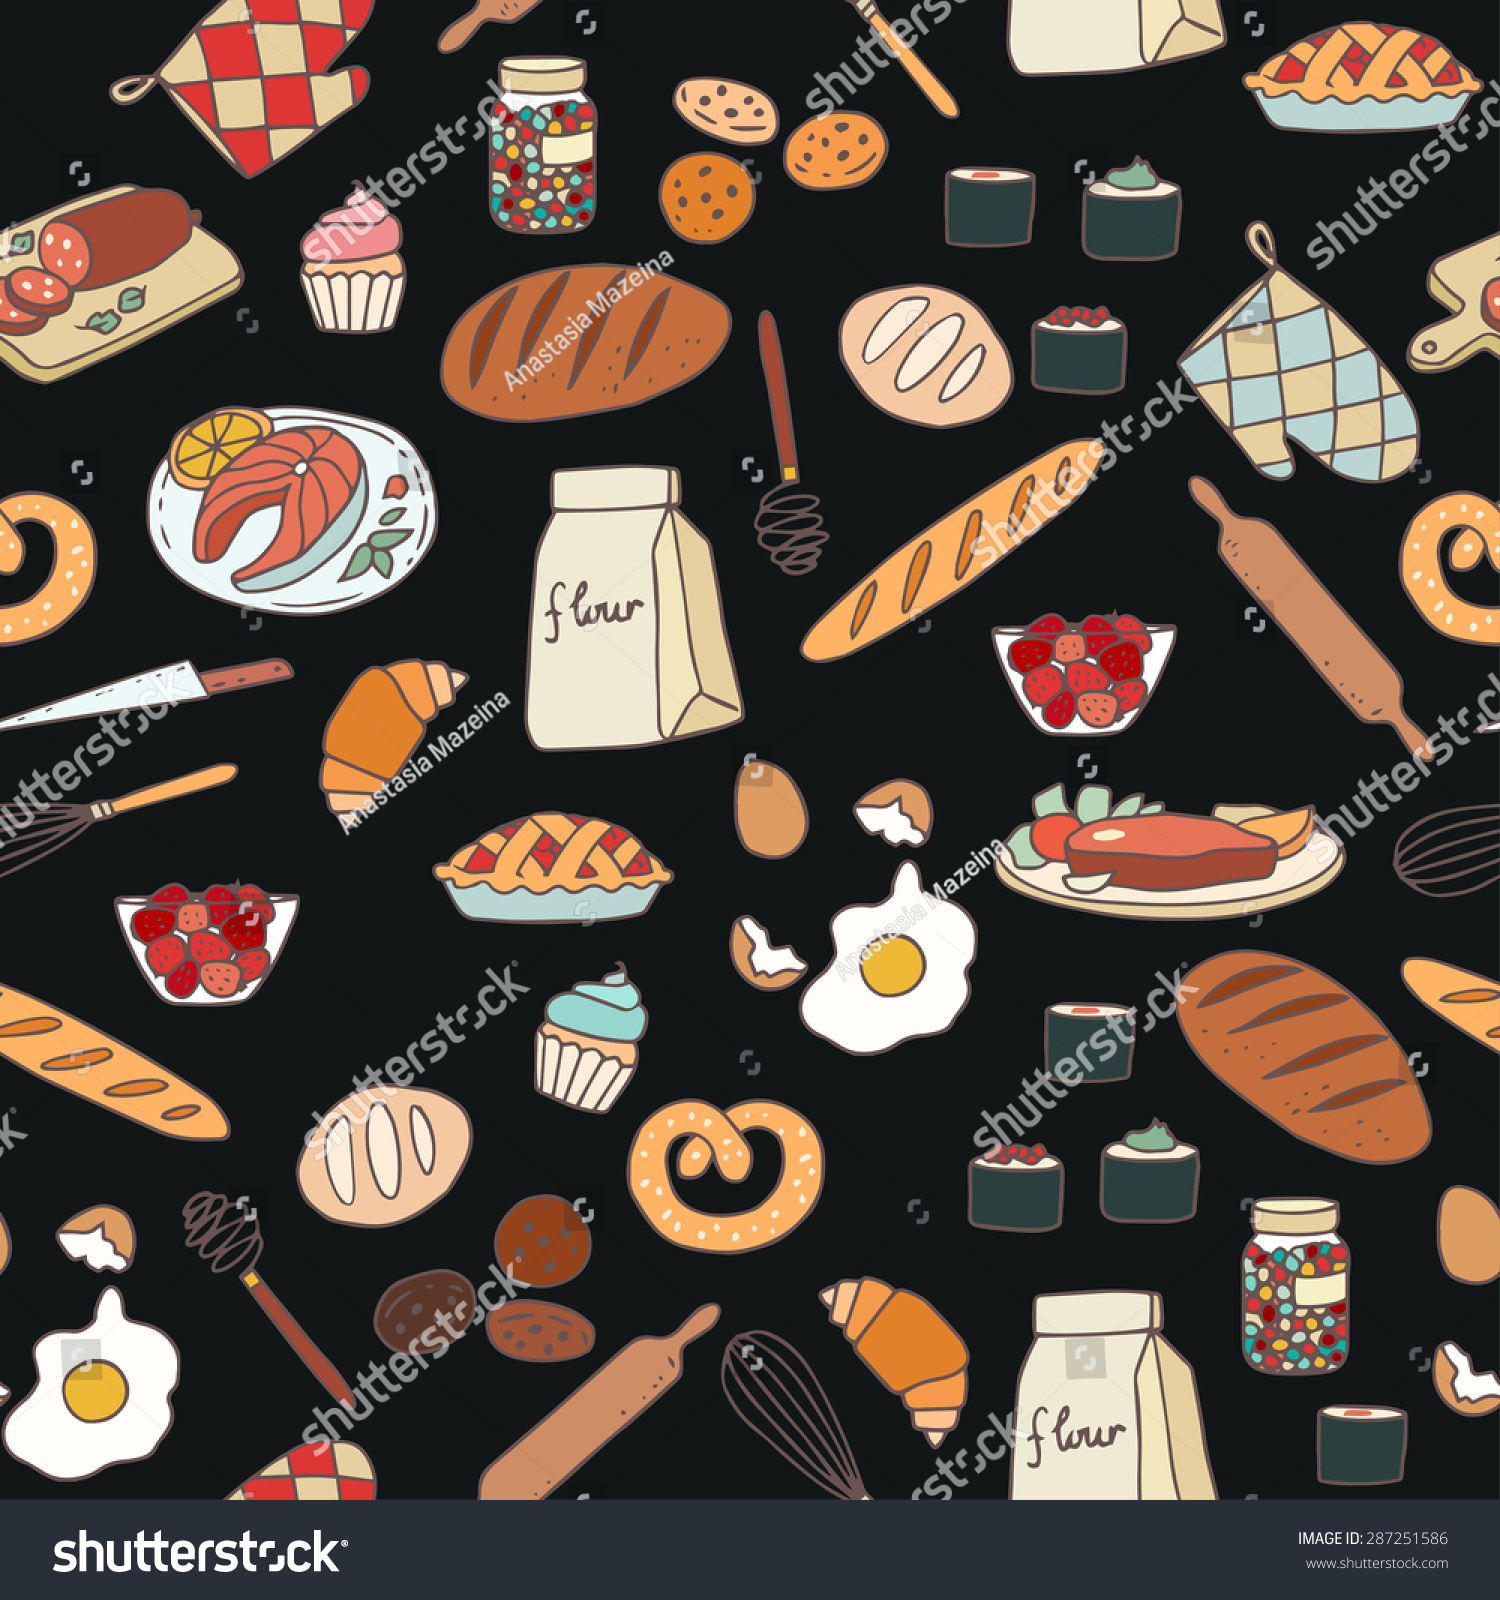 Vector Set With Food. - 287251586 : Shutterstock